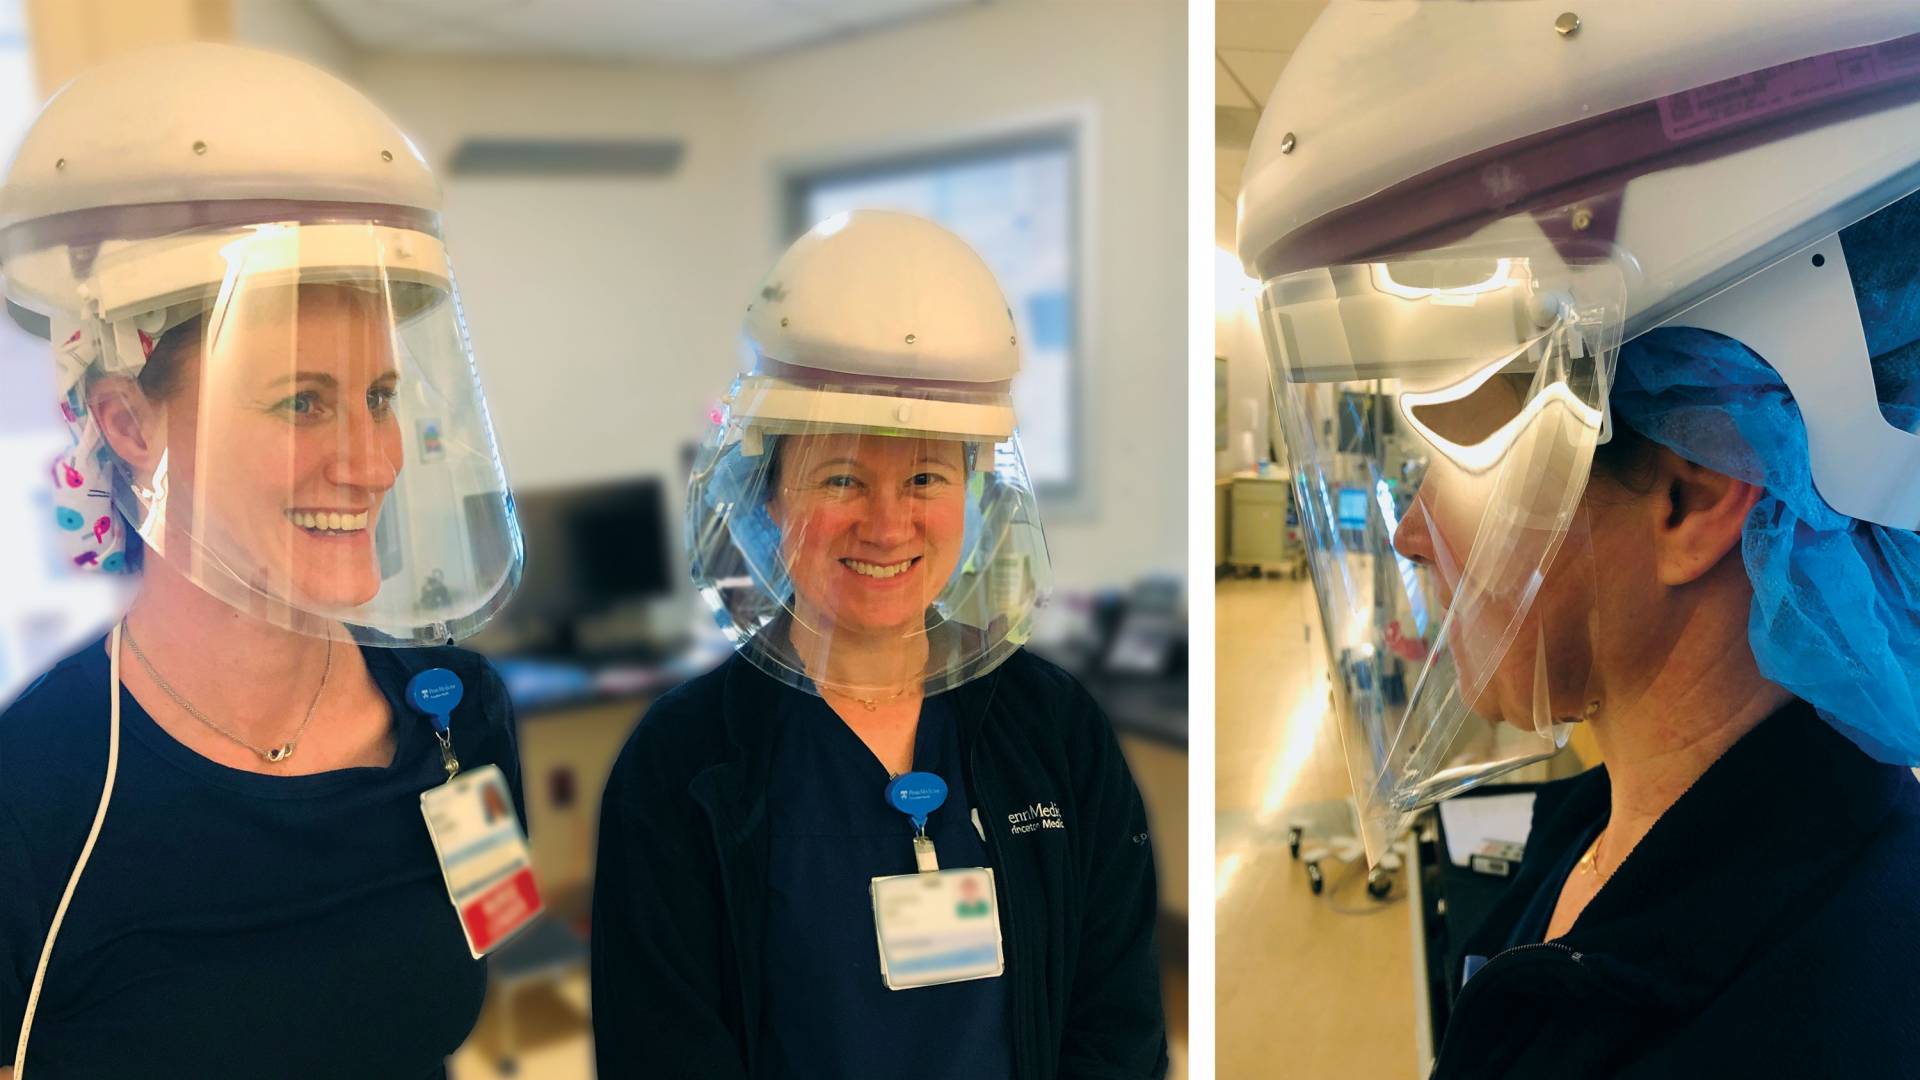 Nurses wear innovative PPE